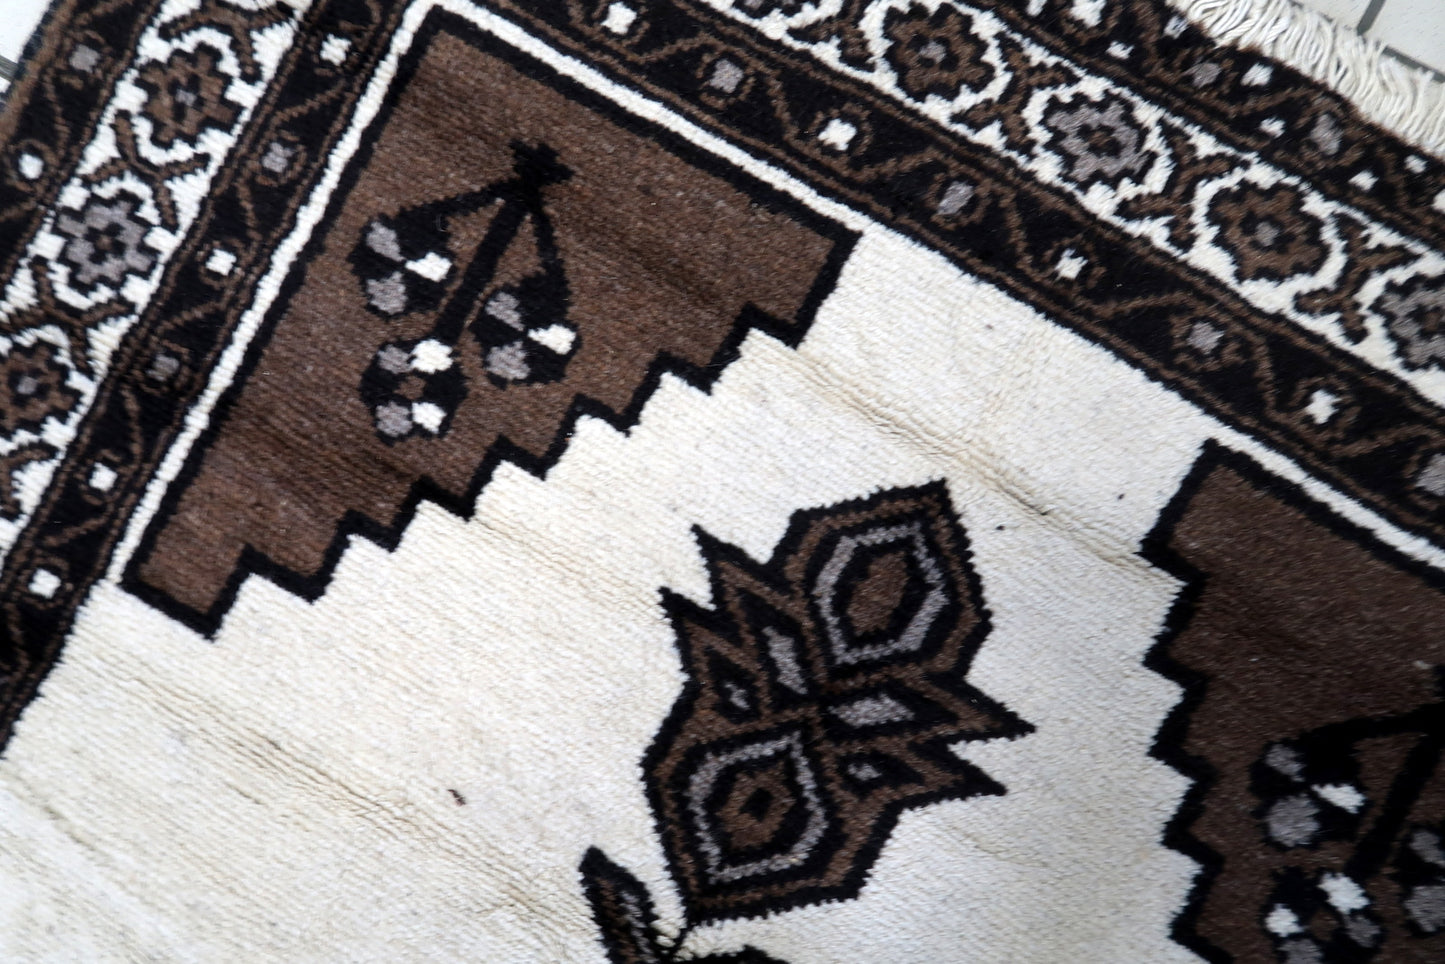 Intricate Designs in Dark Brown and Black Creating Contrast on Handmade Vintage Persian Gabbeh Rug - 1970s